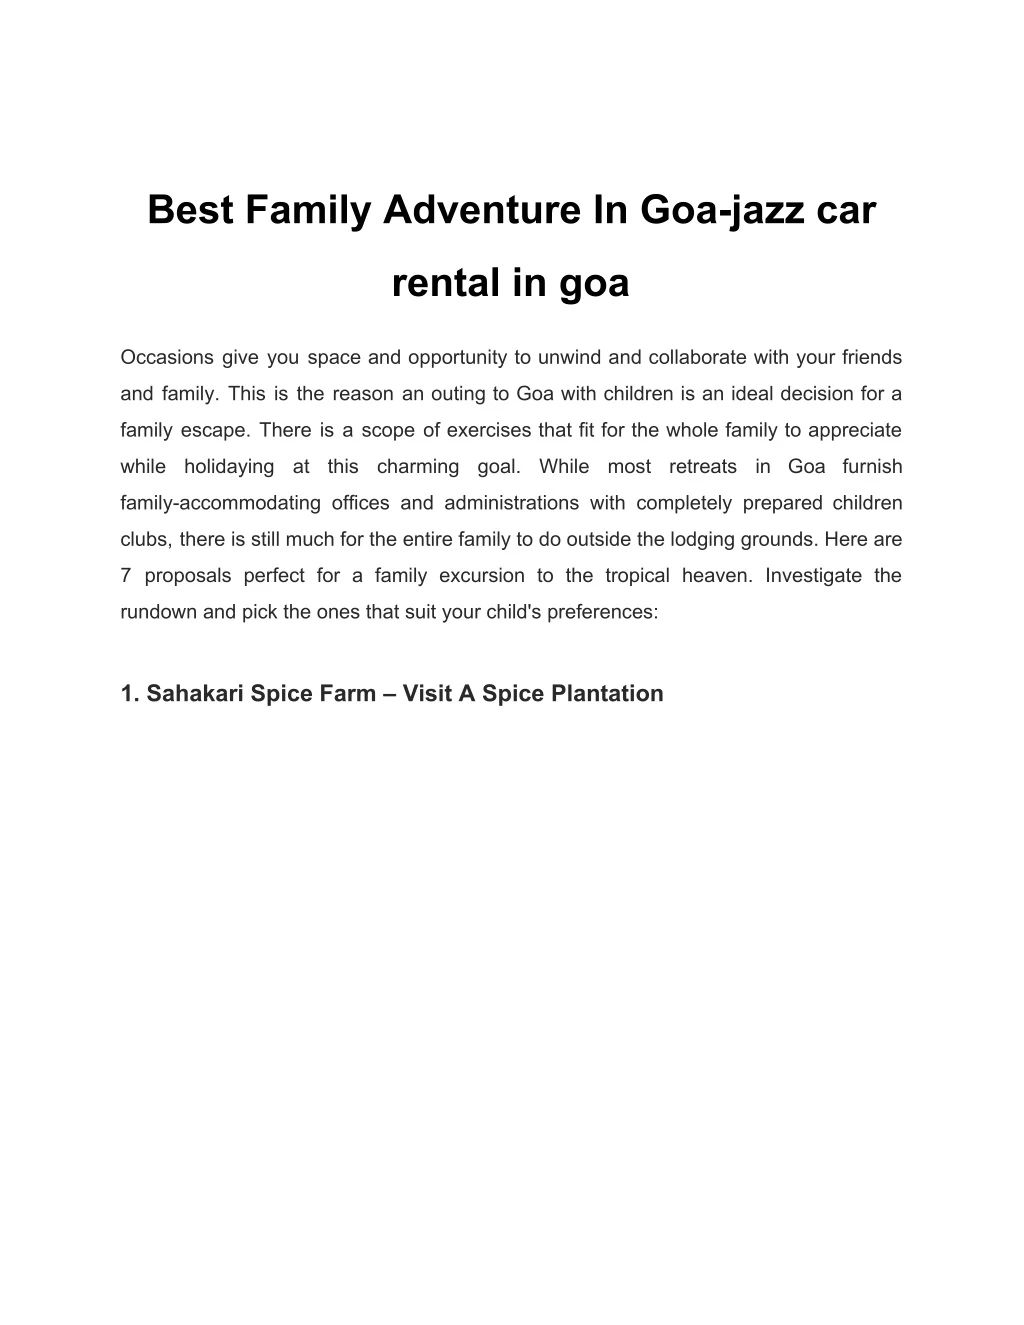 best family adventure in goa jazz car